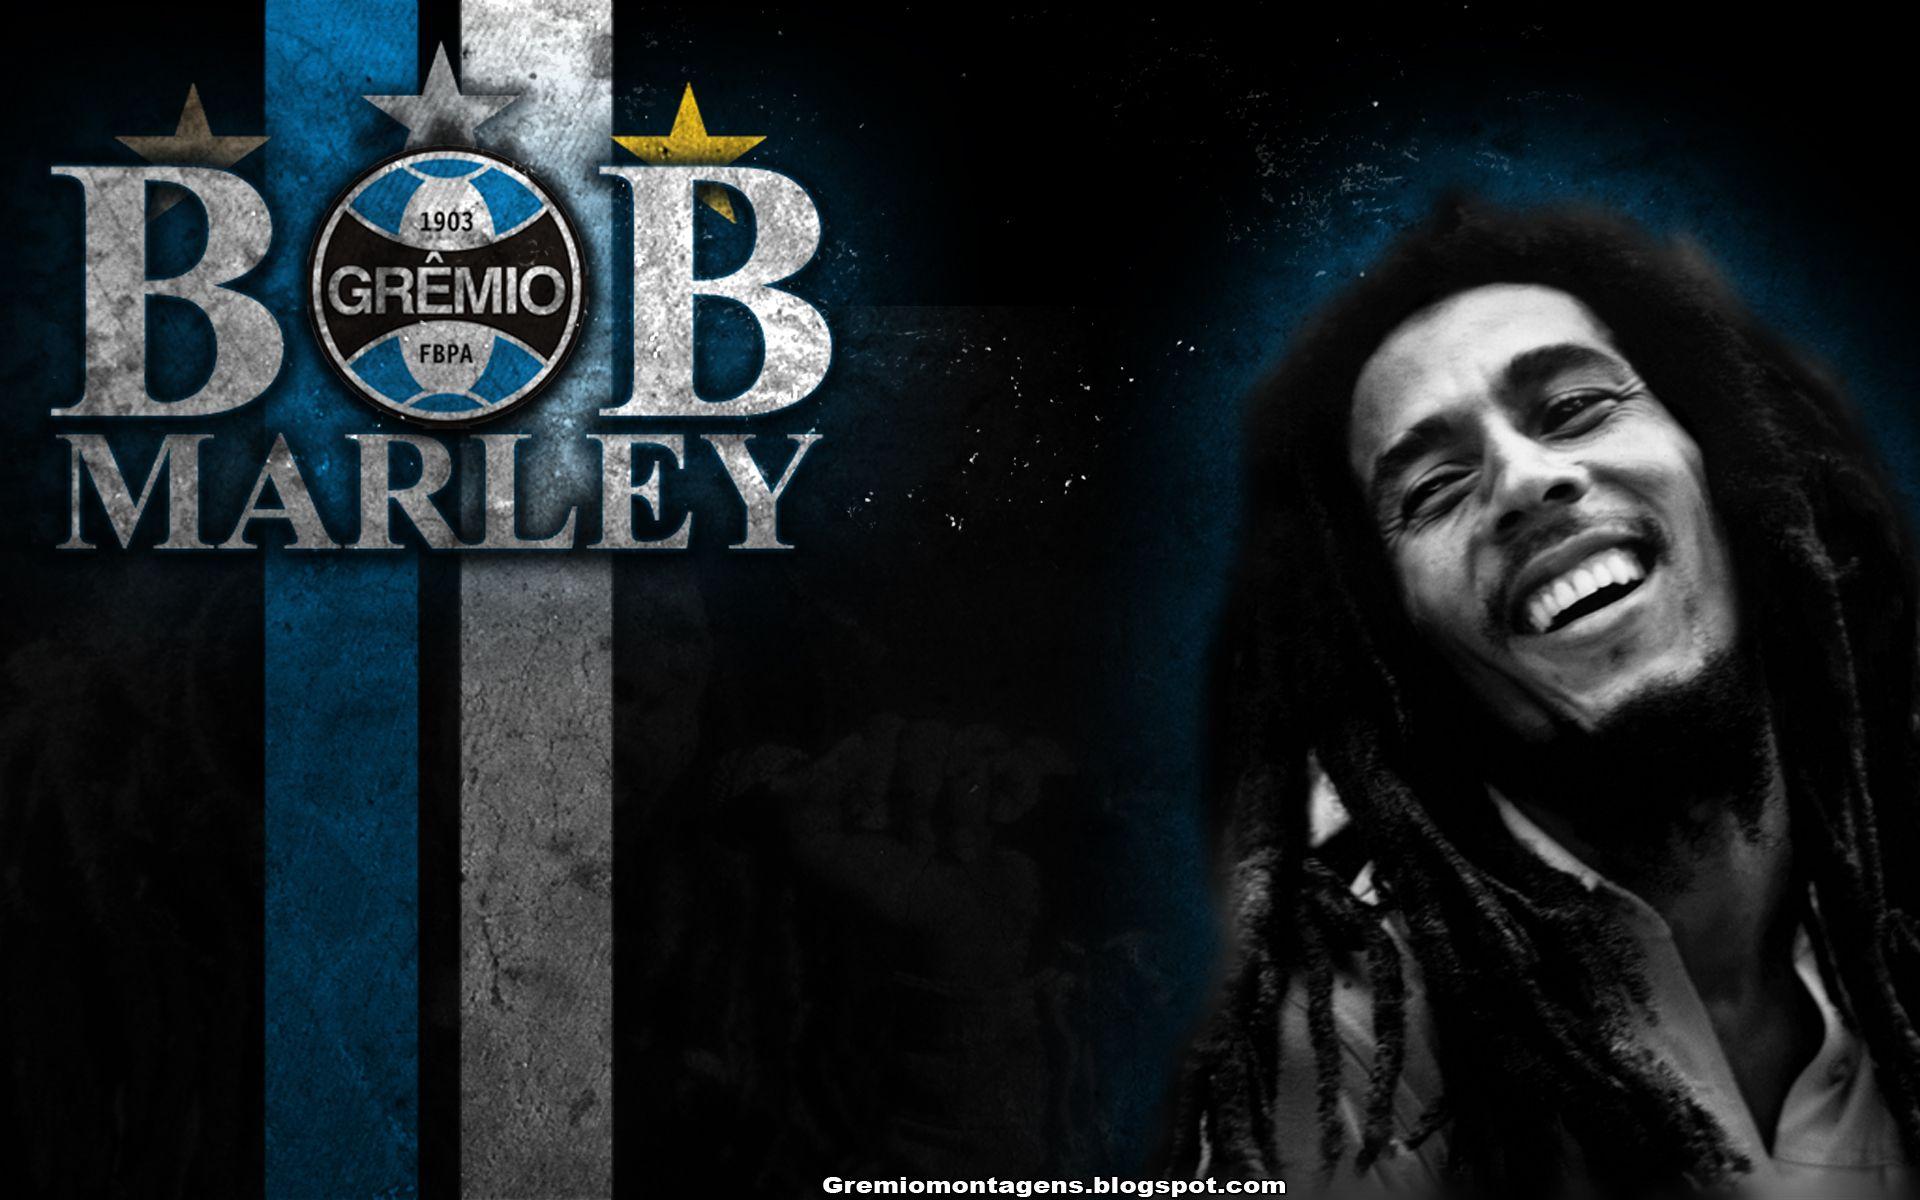 Bob Marley HD Wallpaper for desktop download